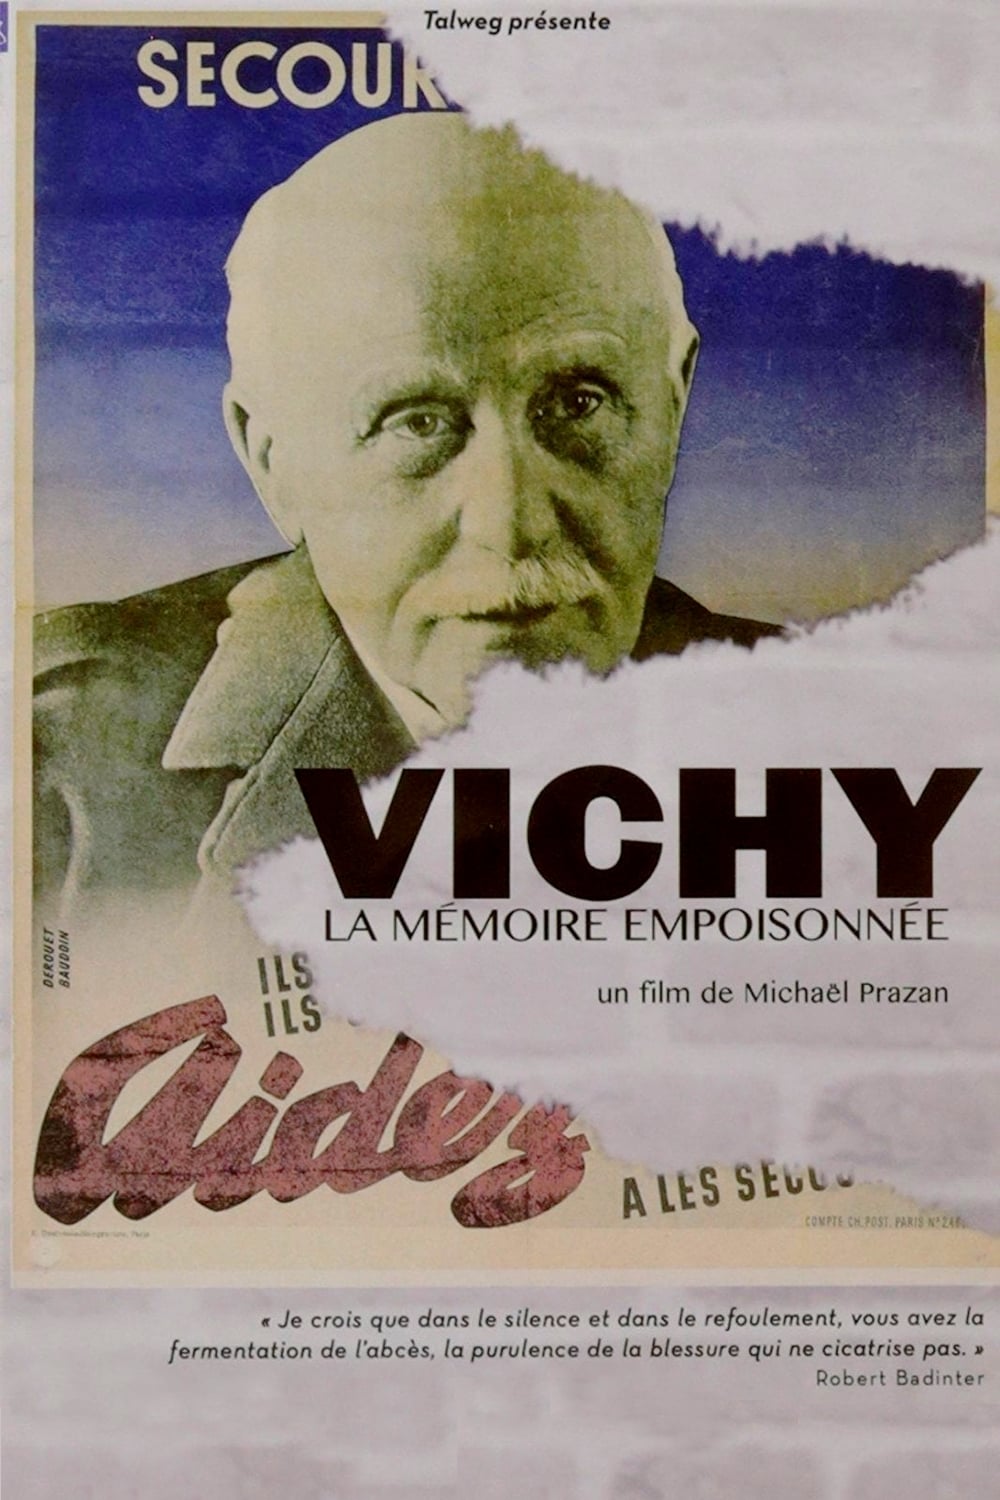 Vichy: A Poisonous Memory